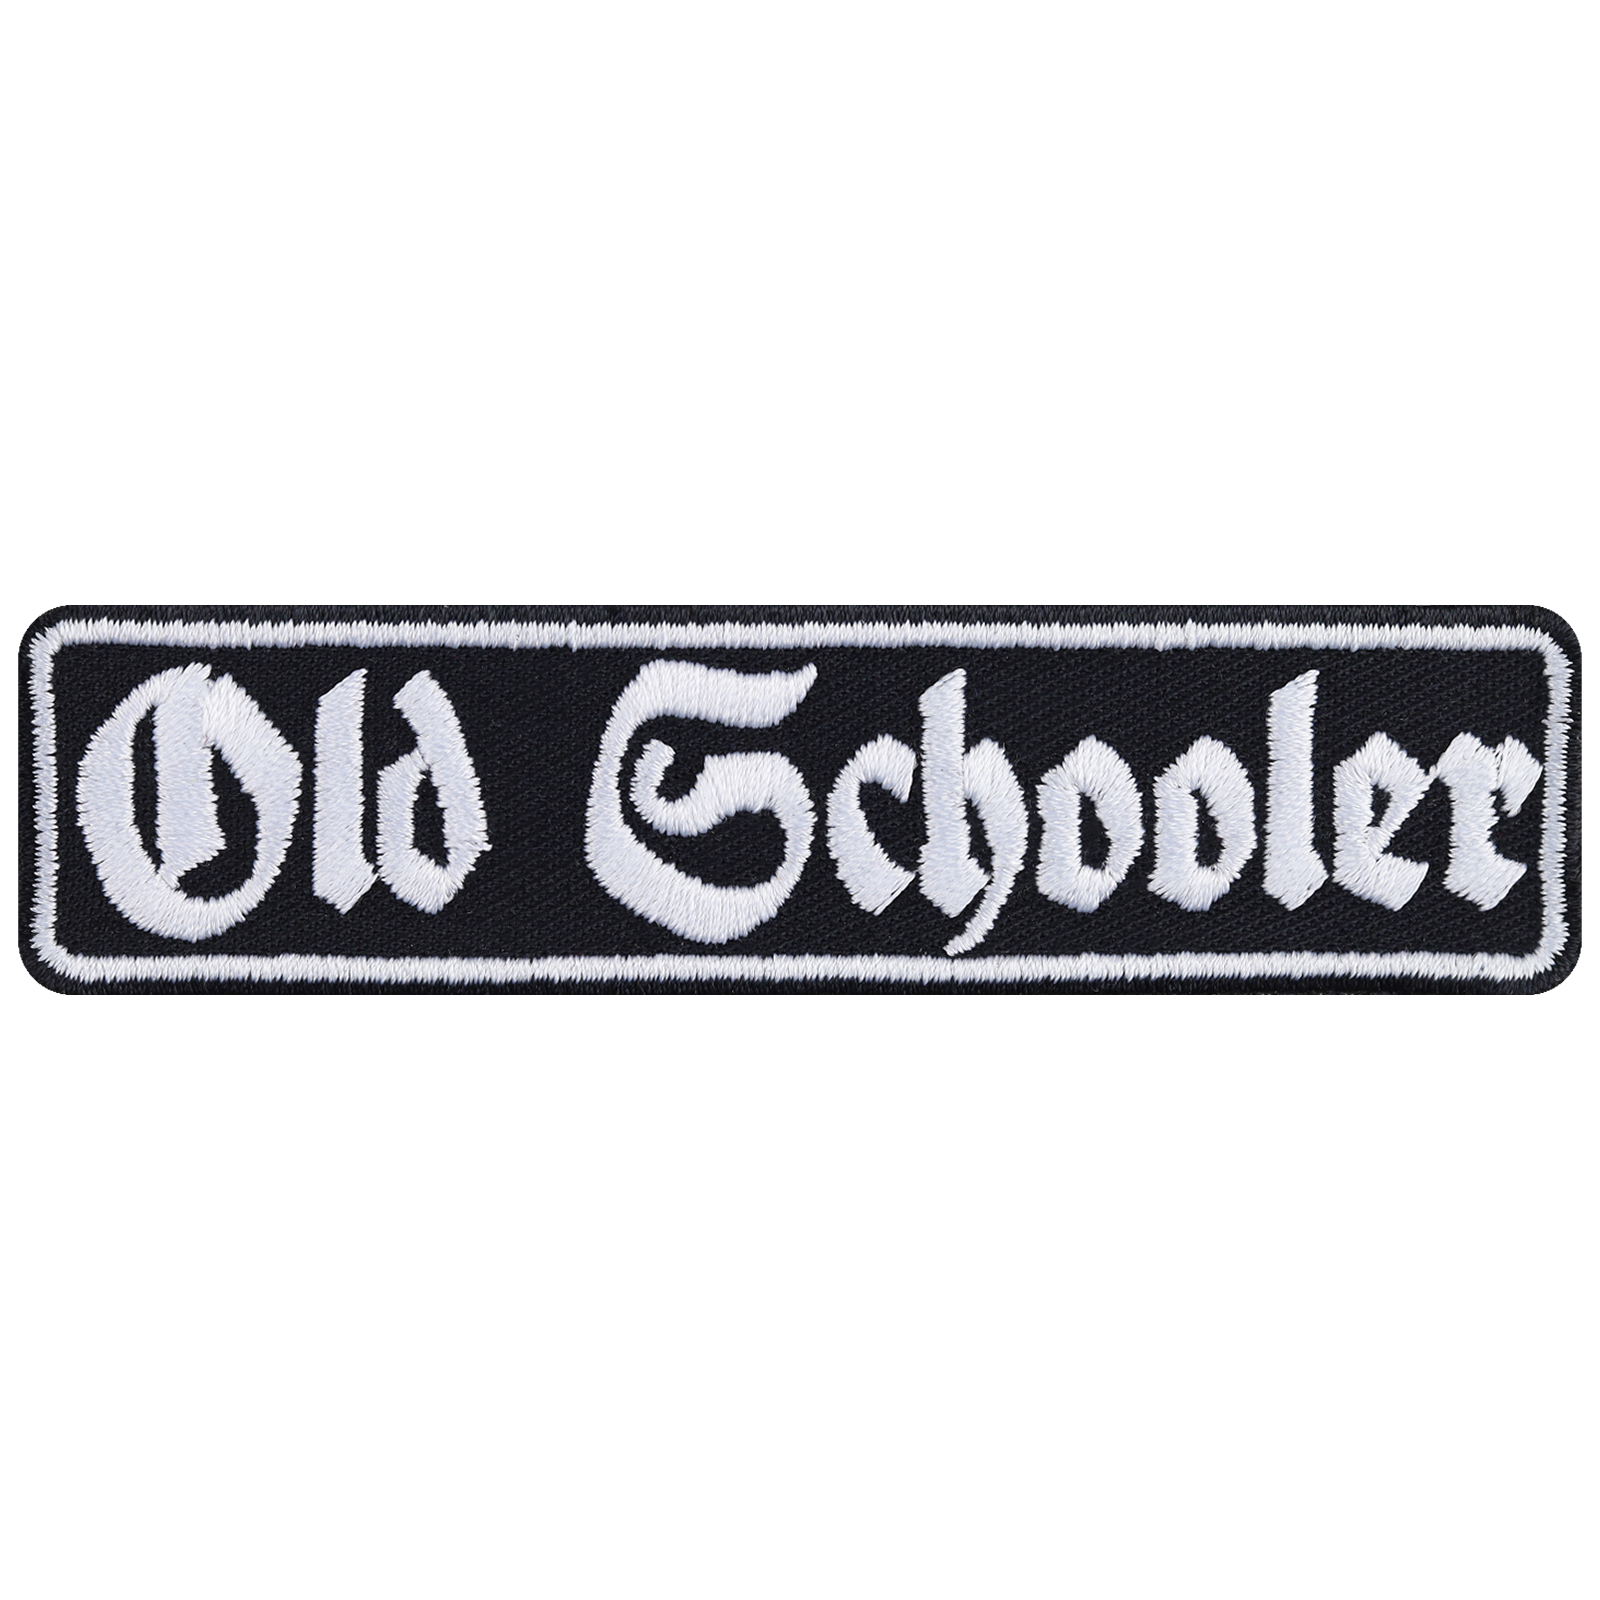 Old schooler - Patch